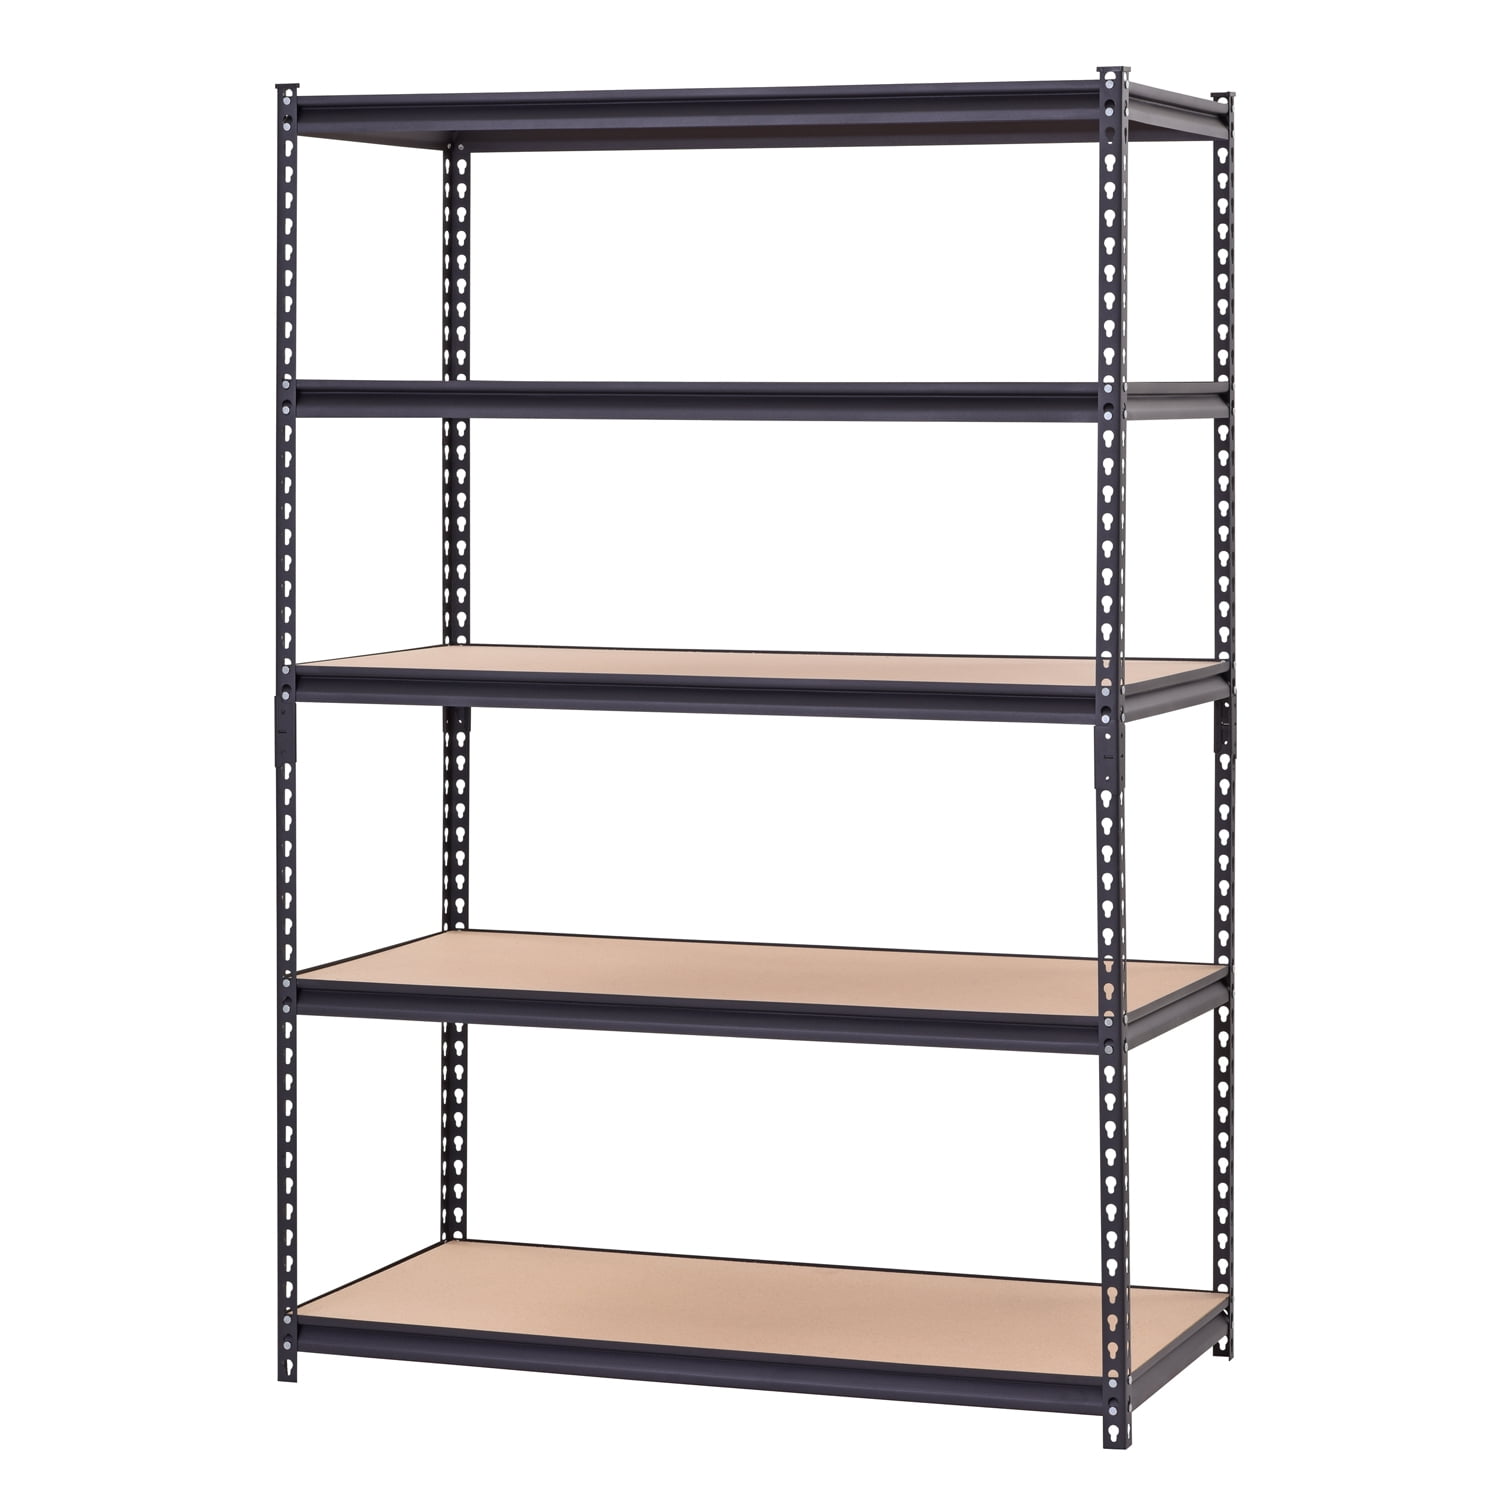 Hardware /& Outdoor Heavy Duty Garage Shelf Steel Metal Storage 5 Level Adjustable Shelves Unit 72 H x 48 W x 24 Deep Pack of 4